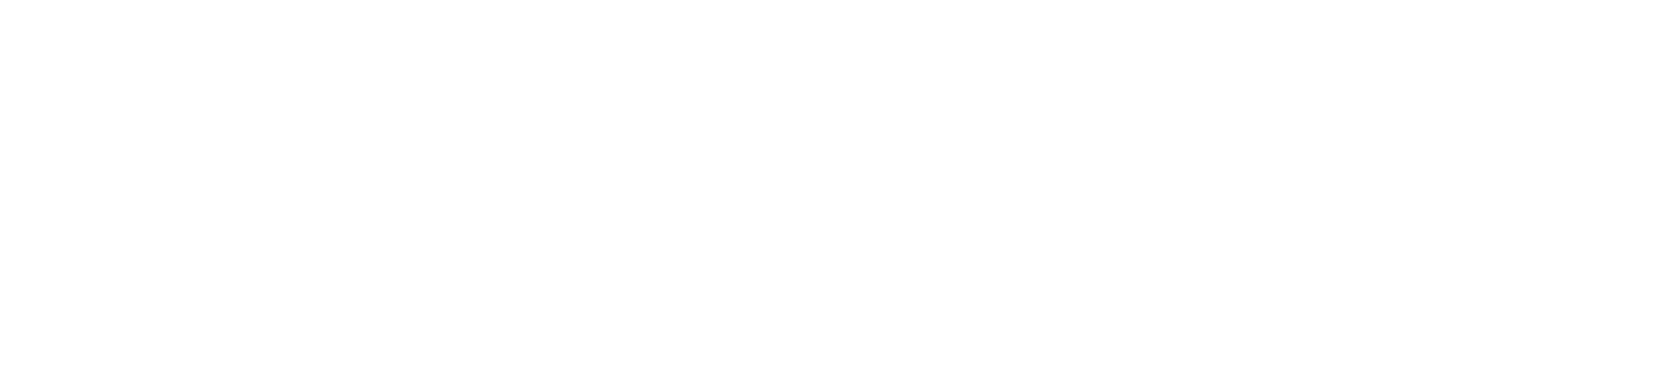 Movicon Production